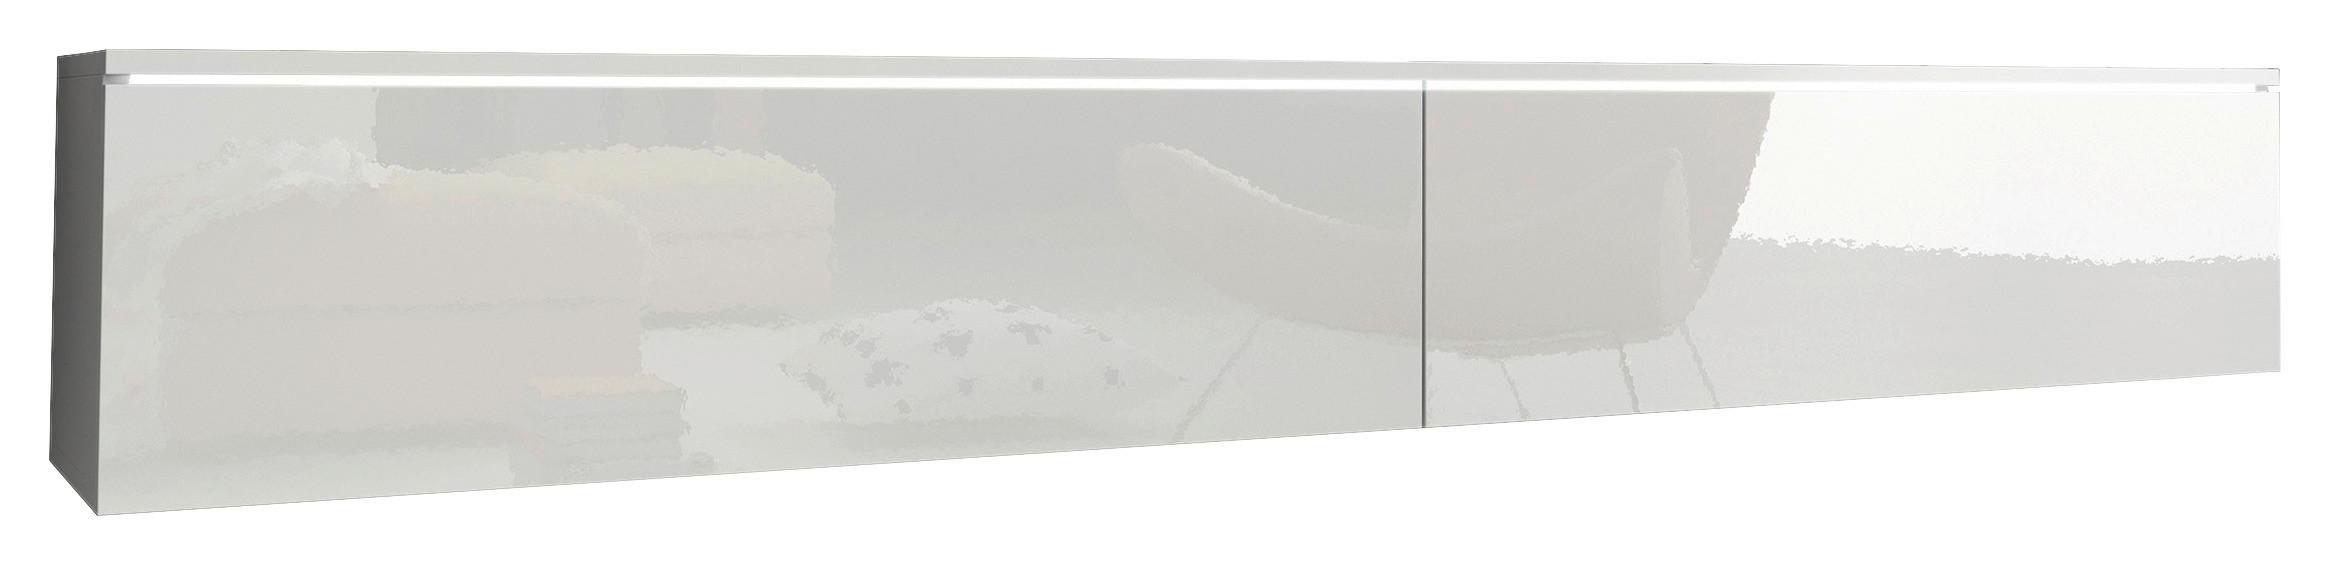 Lowboard B: 180 cm Weiß/Weiß Hochglanz - Weiß Hochglanz/Weiß, LIFESTYLE, Holzwerkstoff (180/30/33cm) - P & B